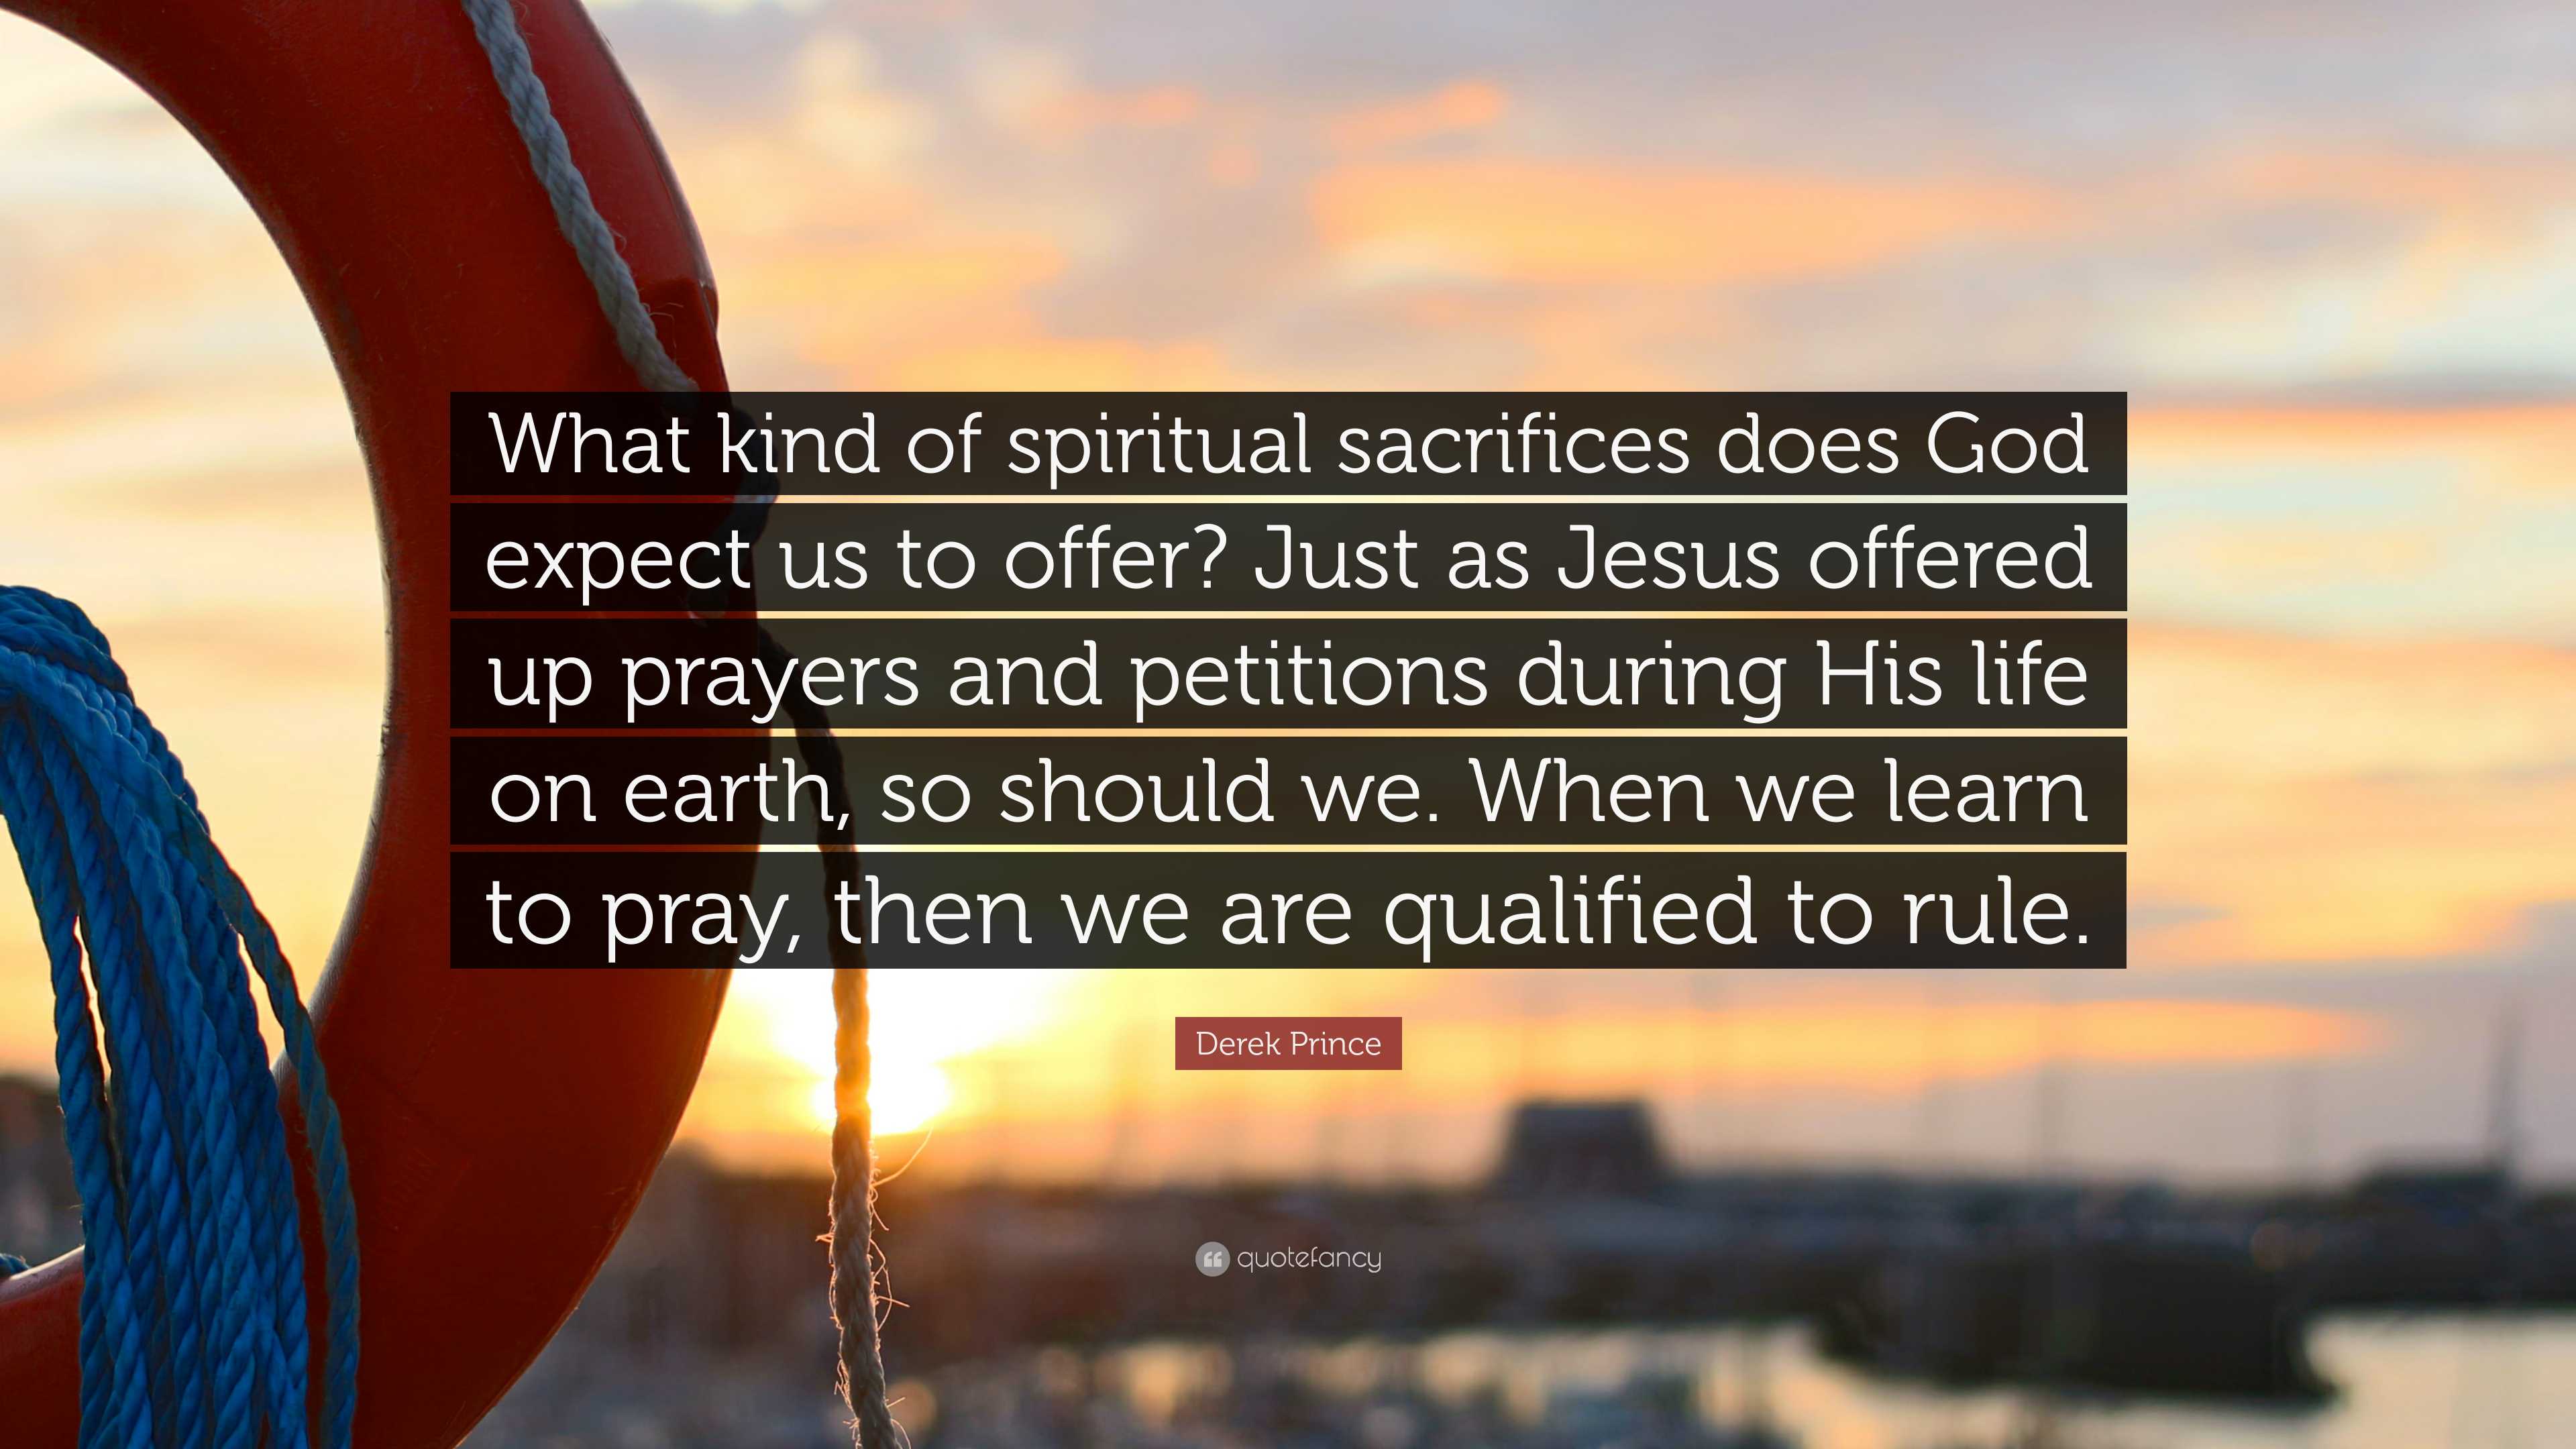 What are spiritual sacrifices?